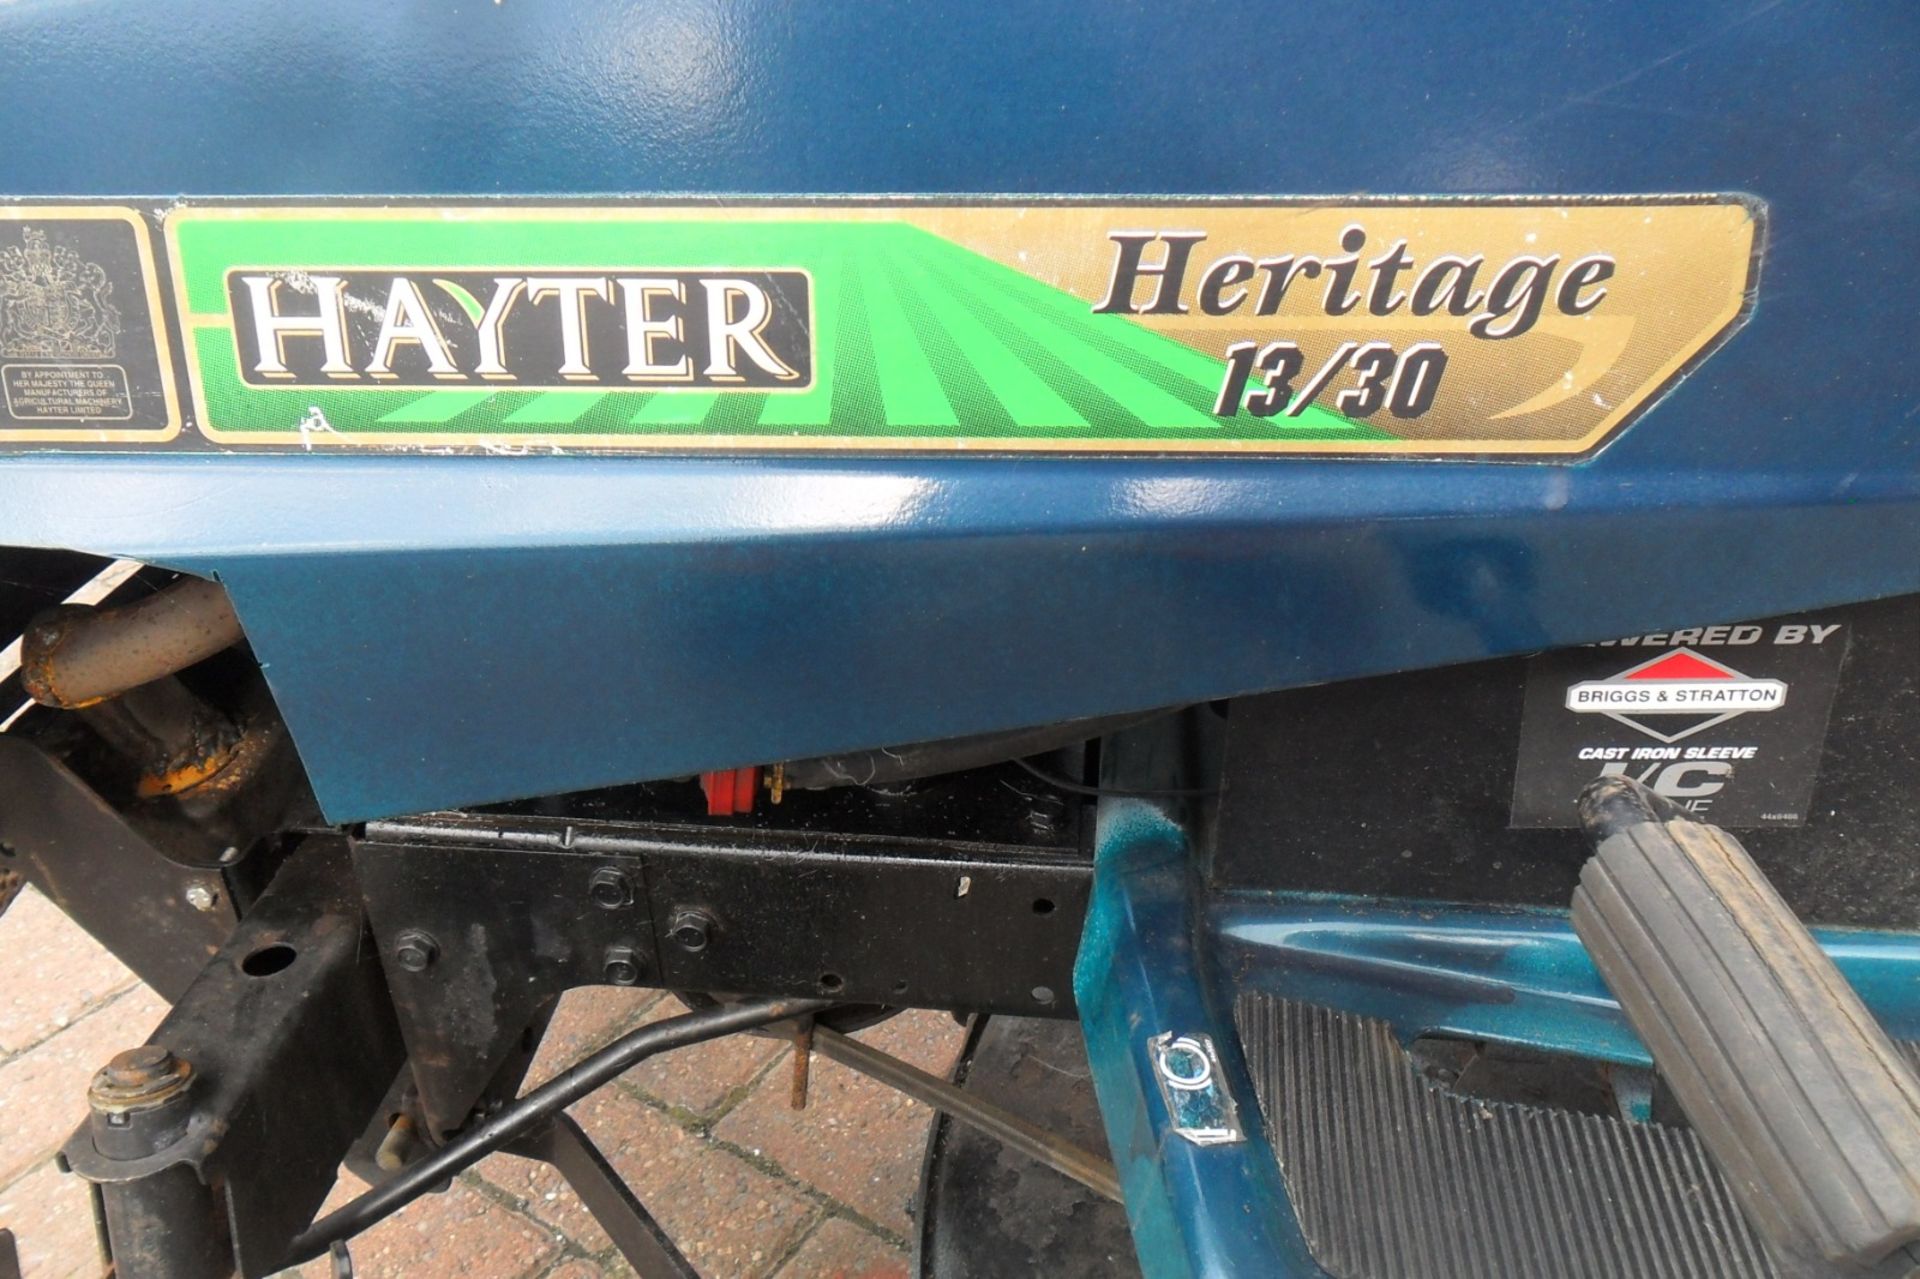 HAYTER heritage 13/30 driven lawn mower - Image 4 of 6